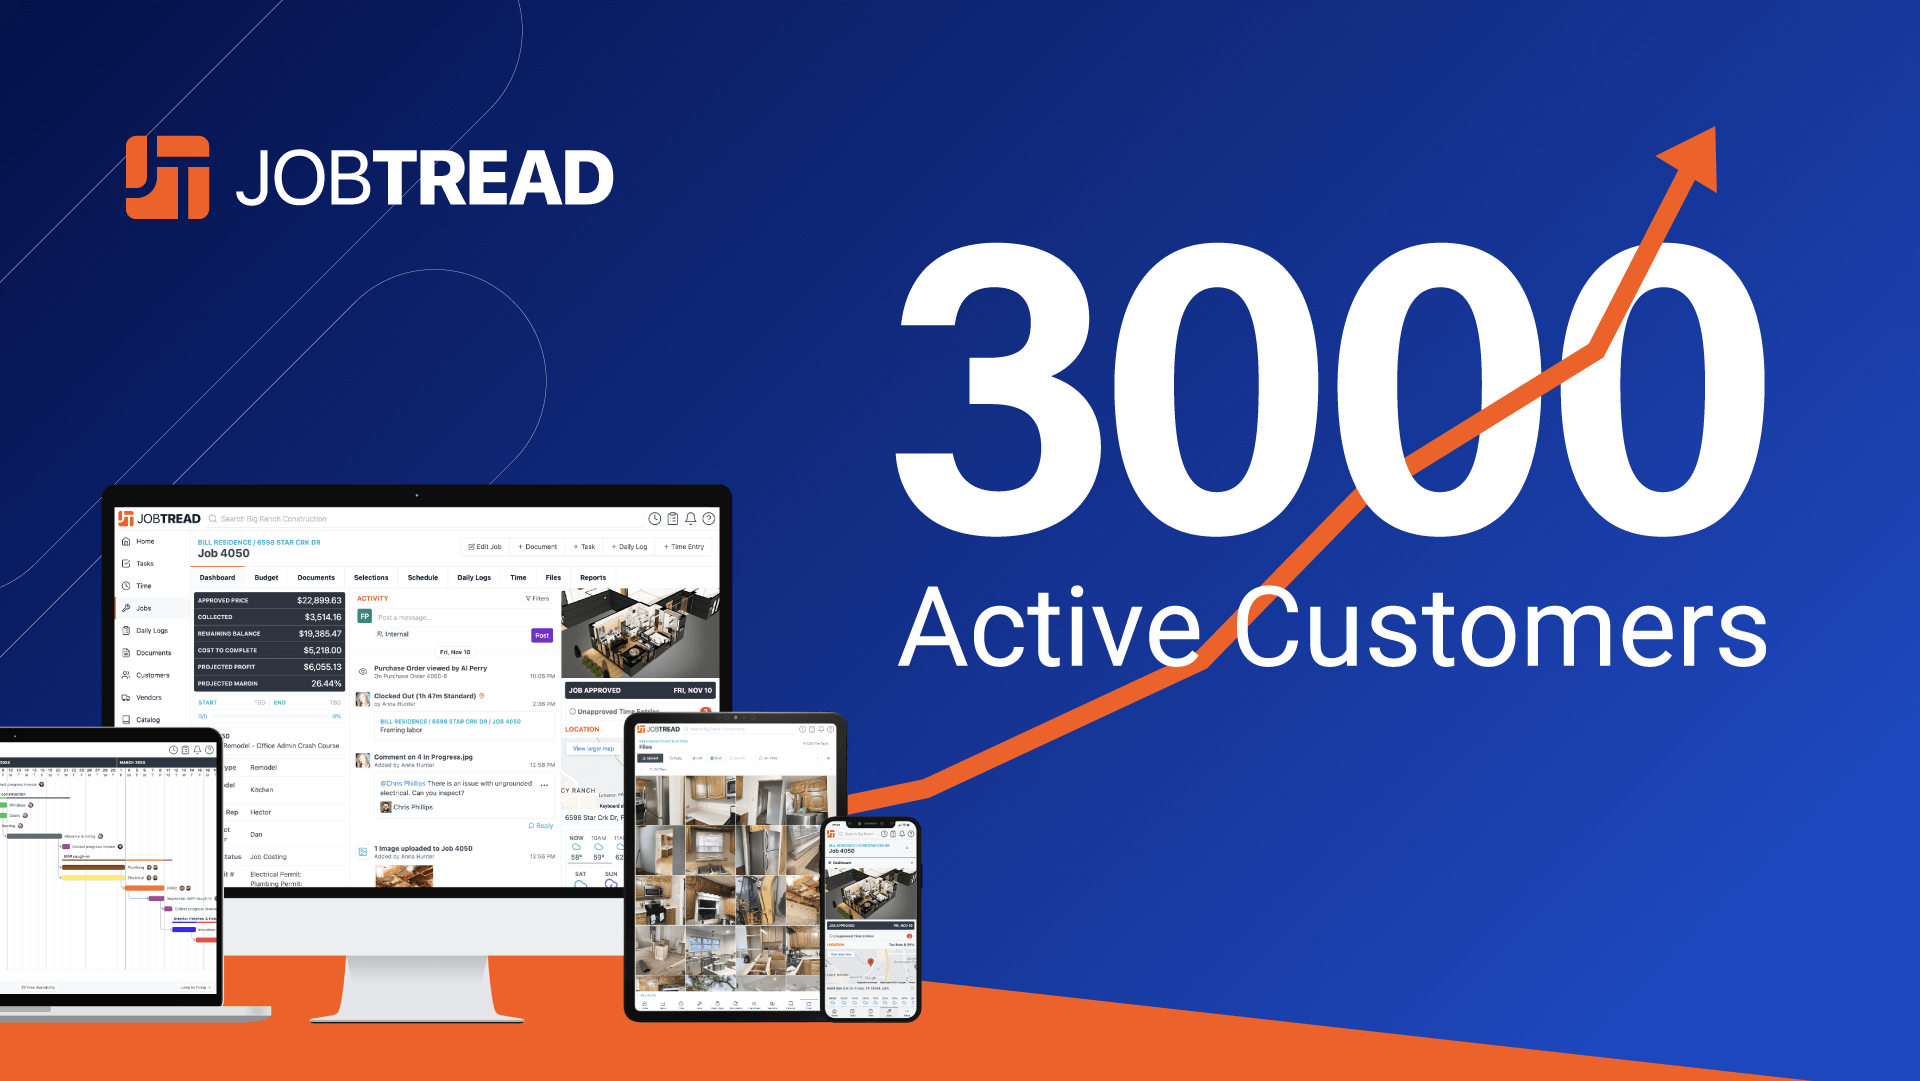 JobTread Reaches 3,000 Active Customers